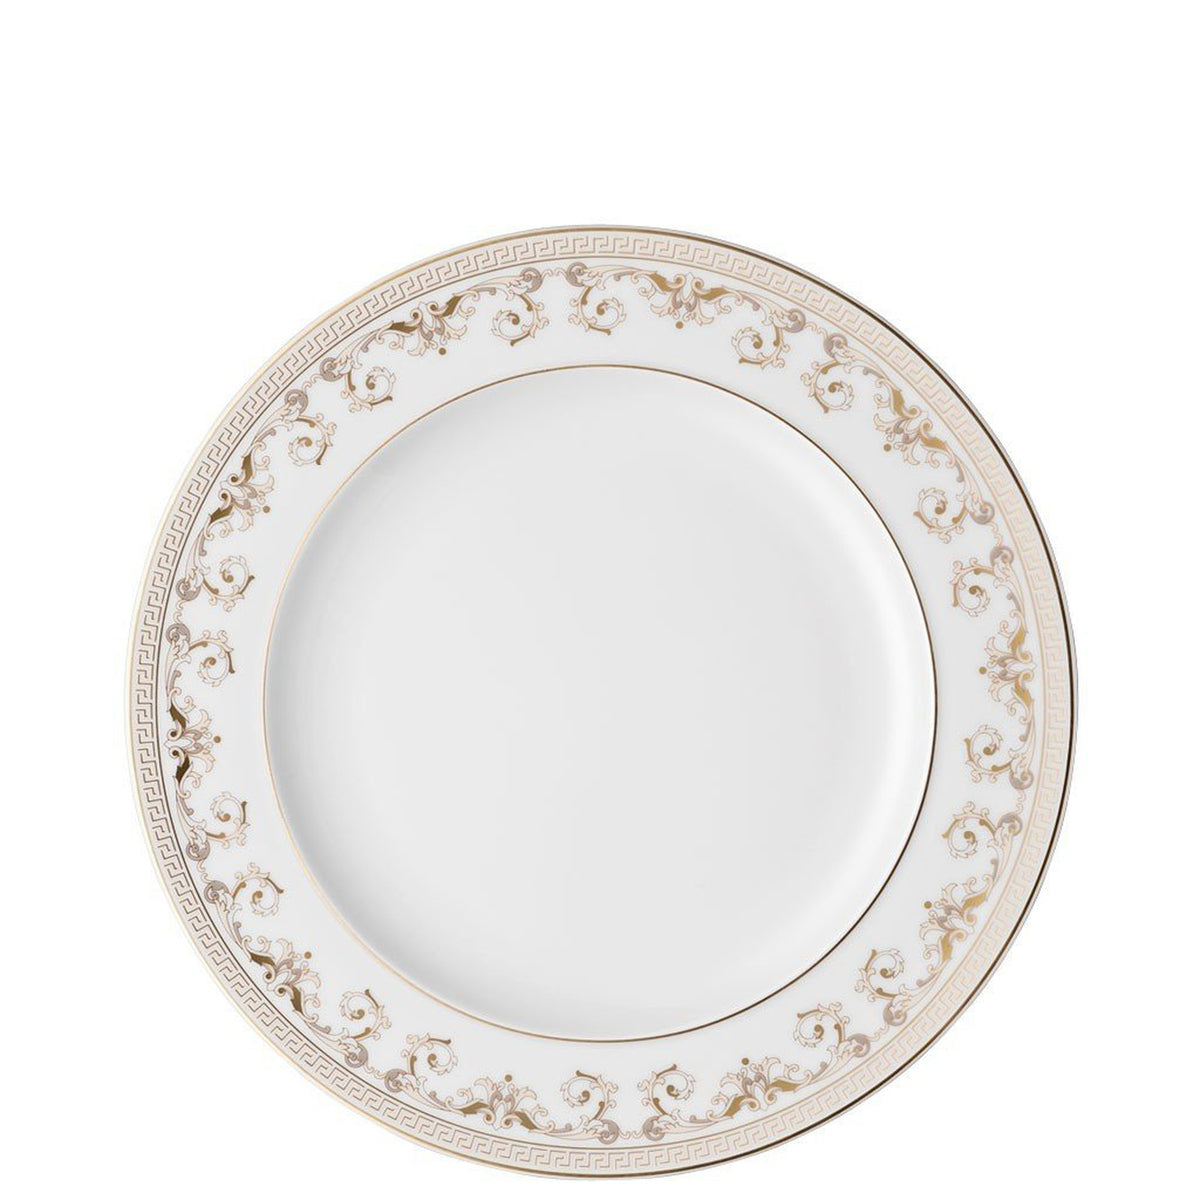 Rosenthal Porcelain, Canape Dish, 4 3/4 inch, Square, Medusa